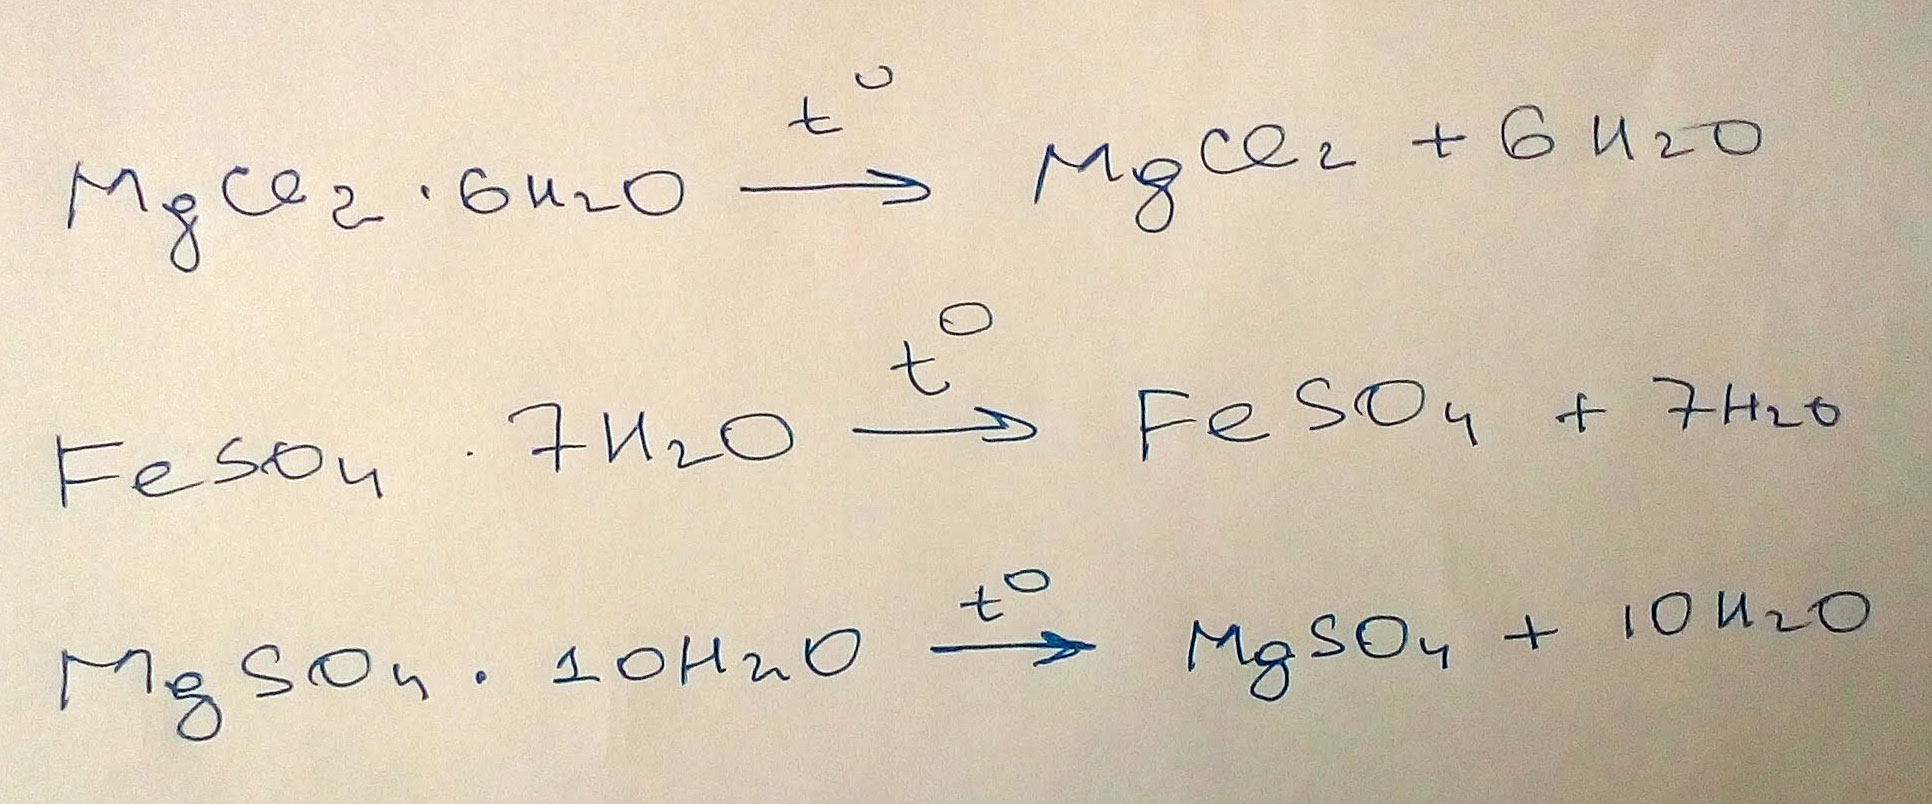 Разобраться с уравнением обезвоживания кристаллогидратов! Вот задания:  MgCl2 * 6H2O -  FeSO4*7H2O -  Ma2SO4 * 10H2O -